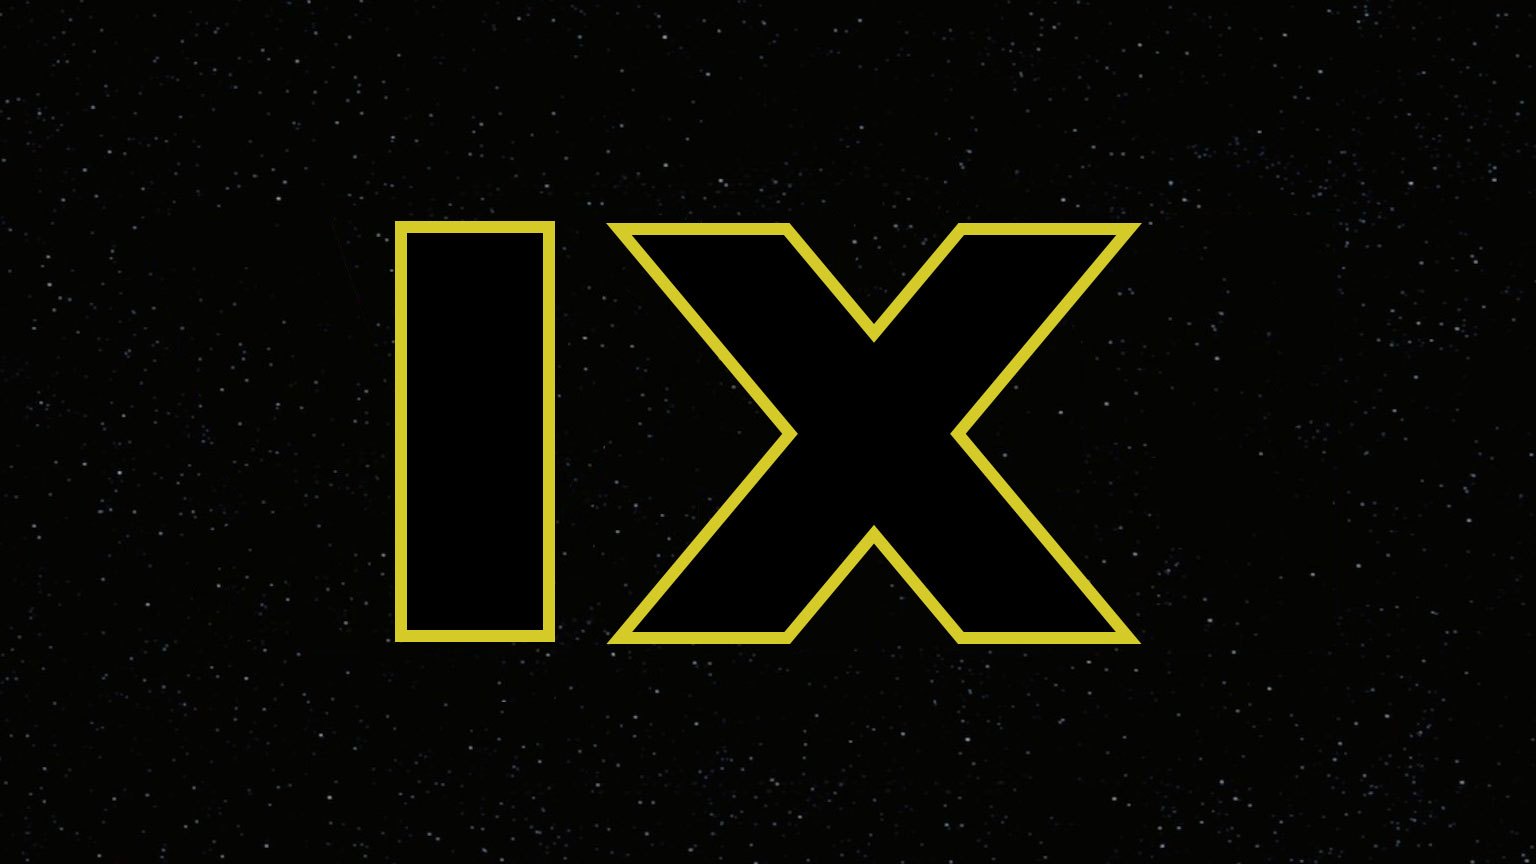 The "IX" logo for Star Wars: Episode IX.